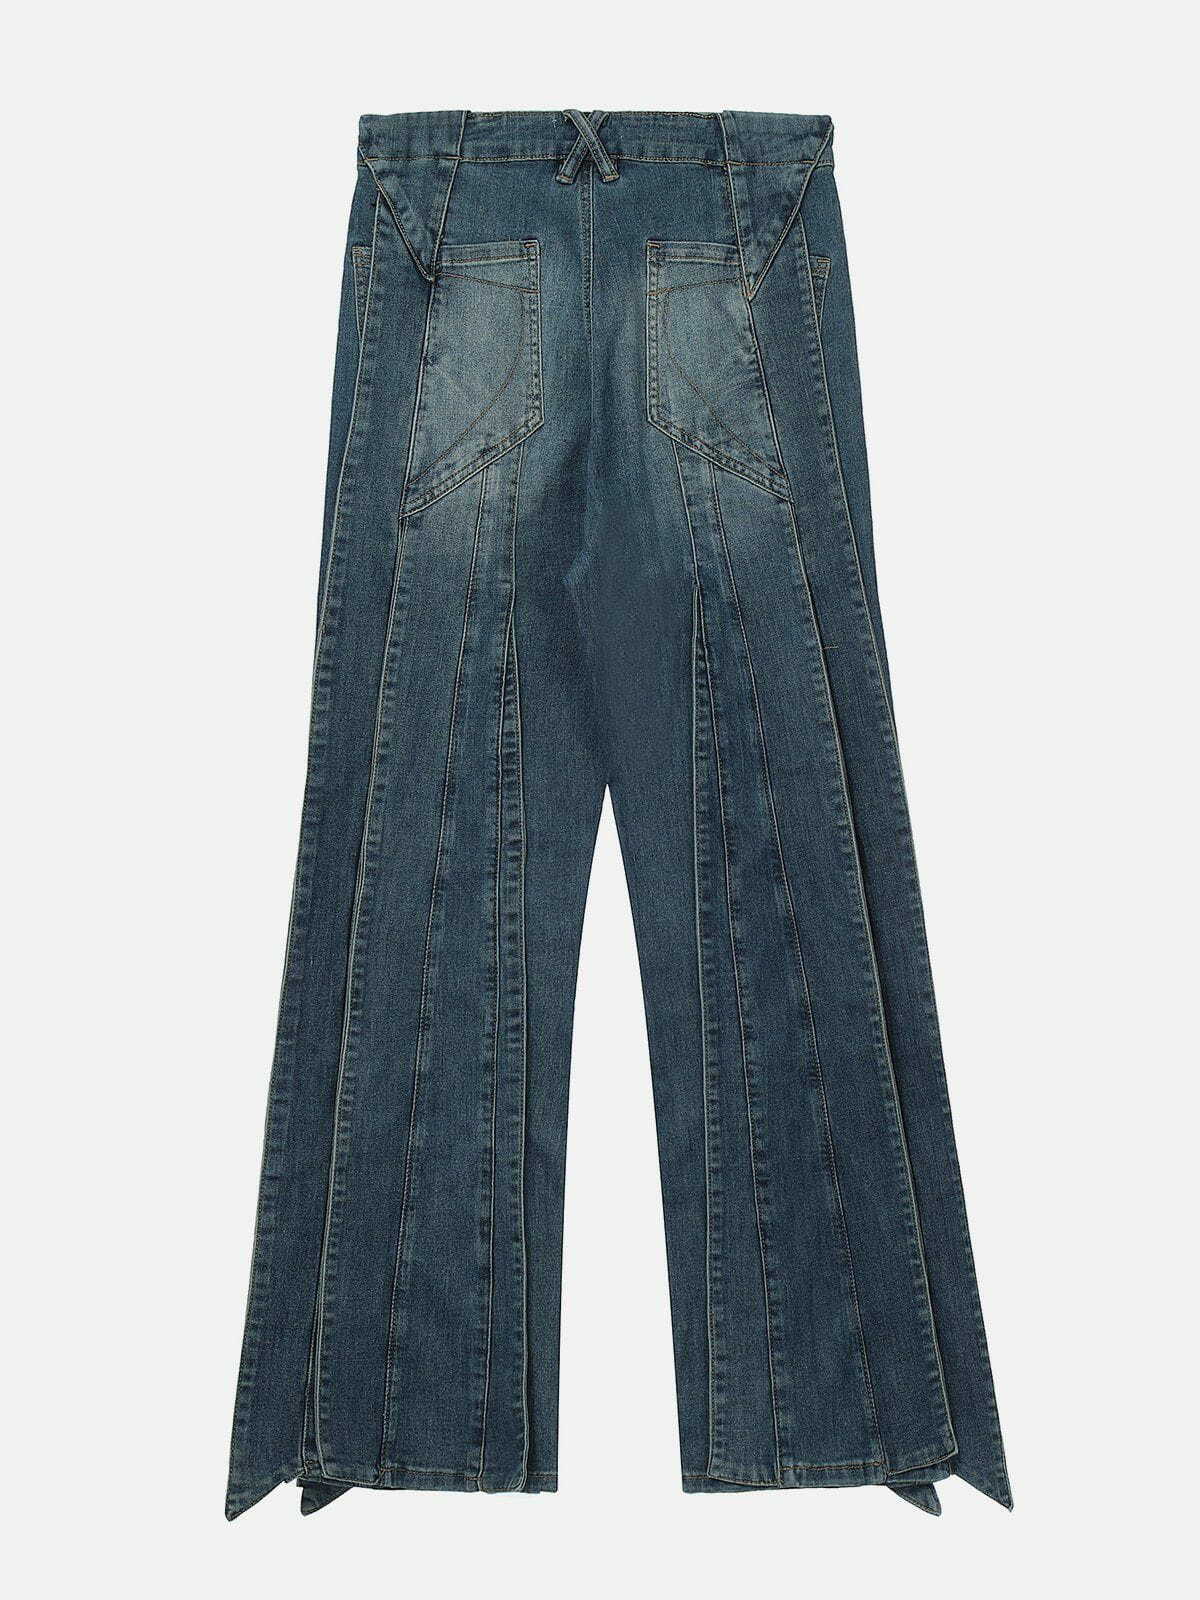 deconstructed split jeans edgy streetwear staple 4161